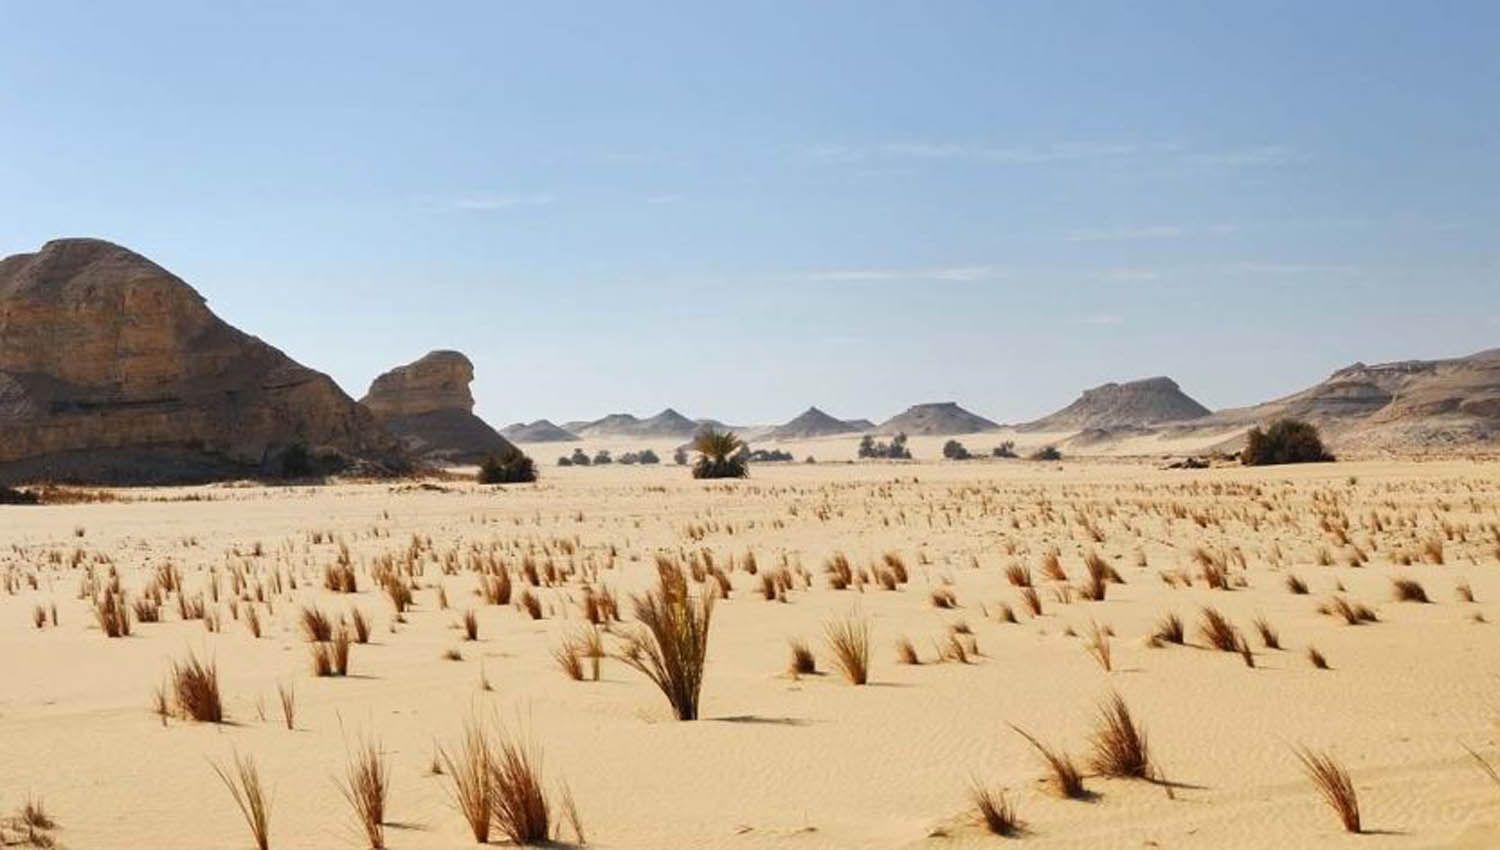 Descubren millones de aacuterboles en el ldquodesiertordquo del Sahara